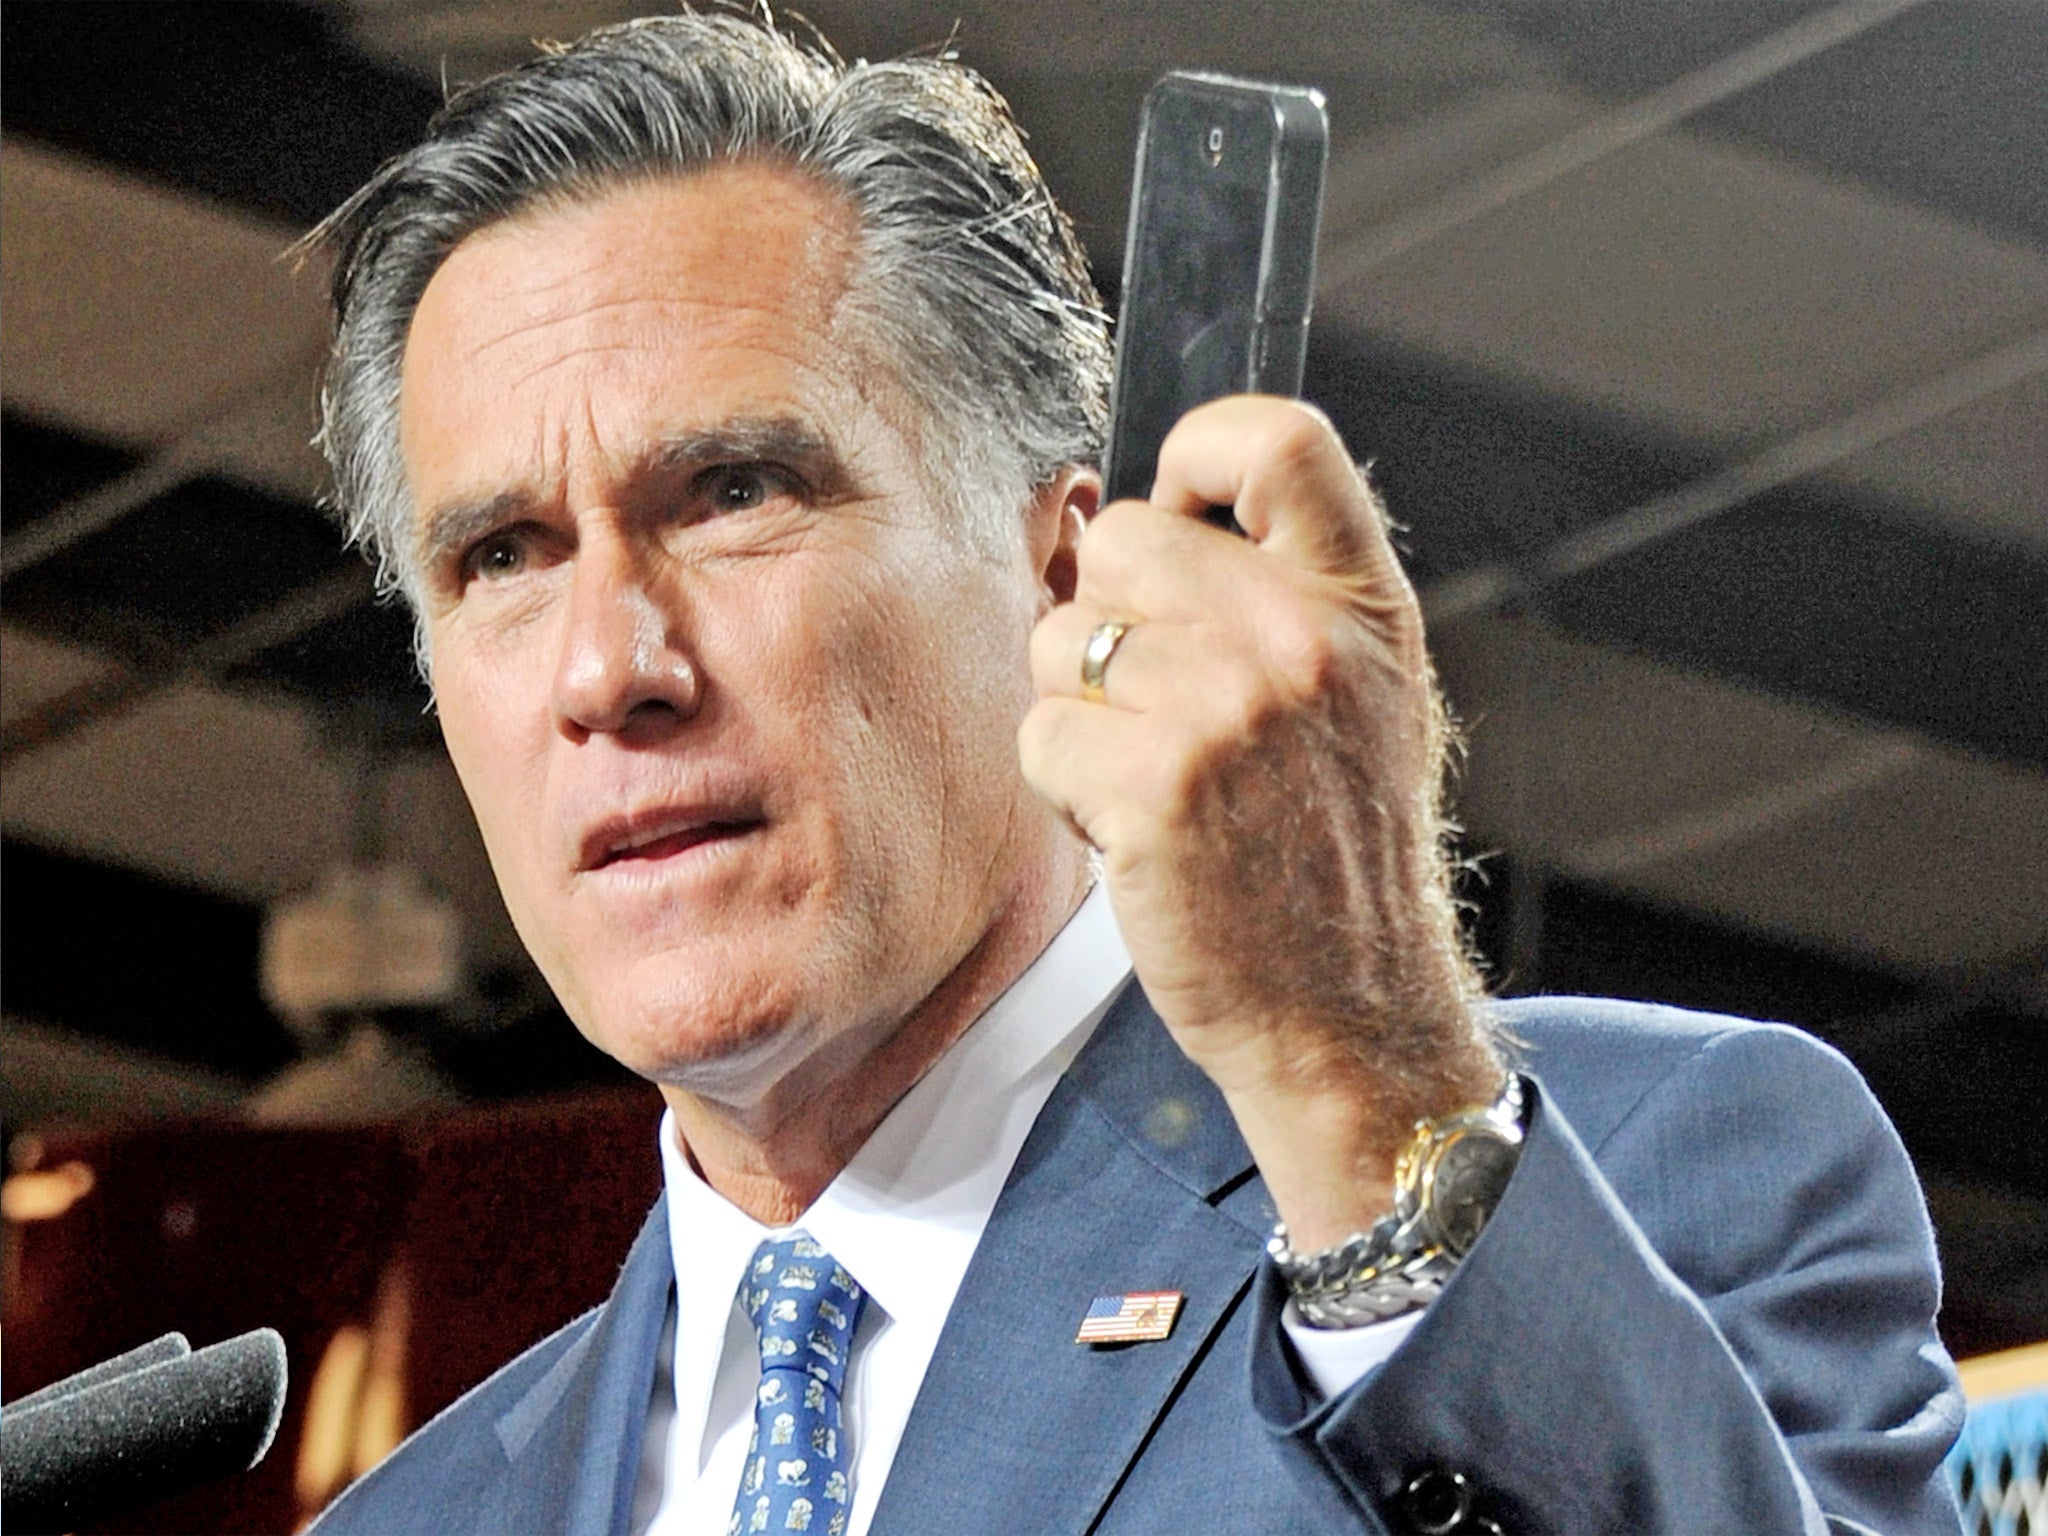 Mitt Romney's Twitter following surged unnaturally